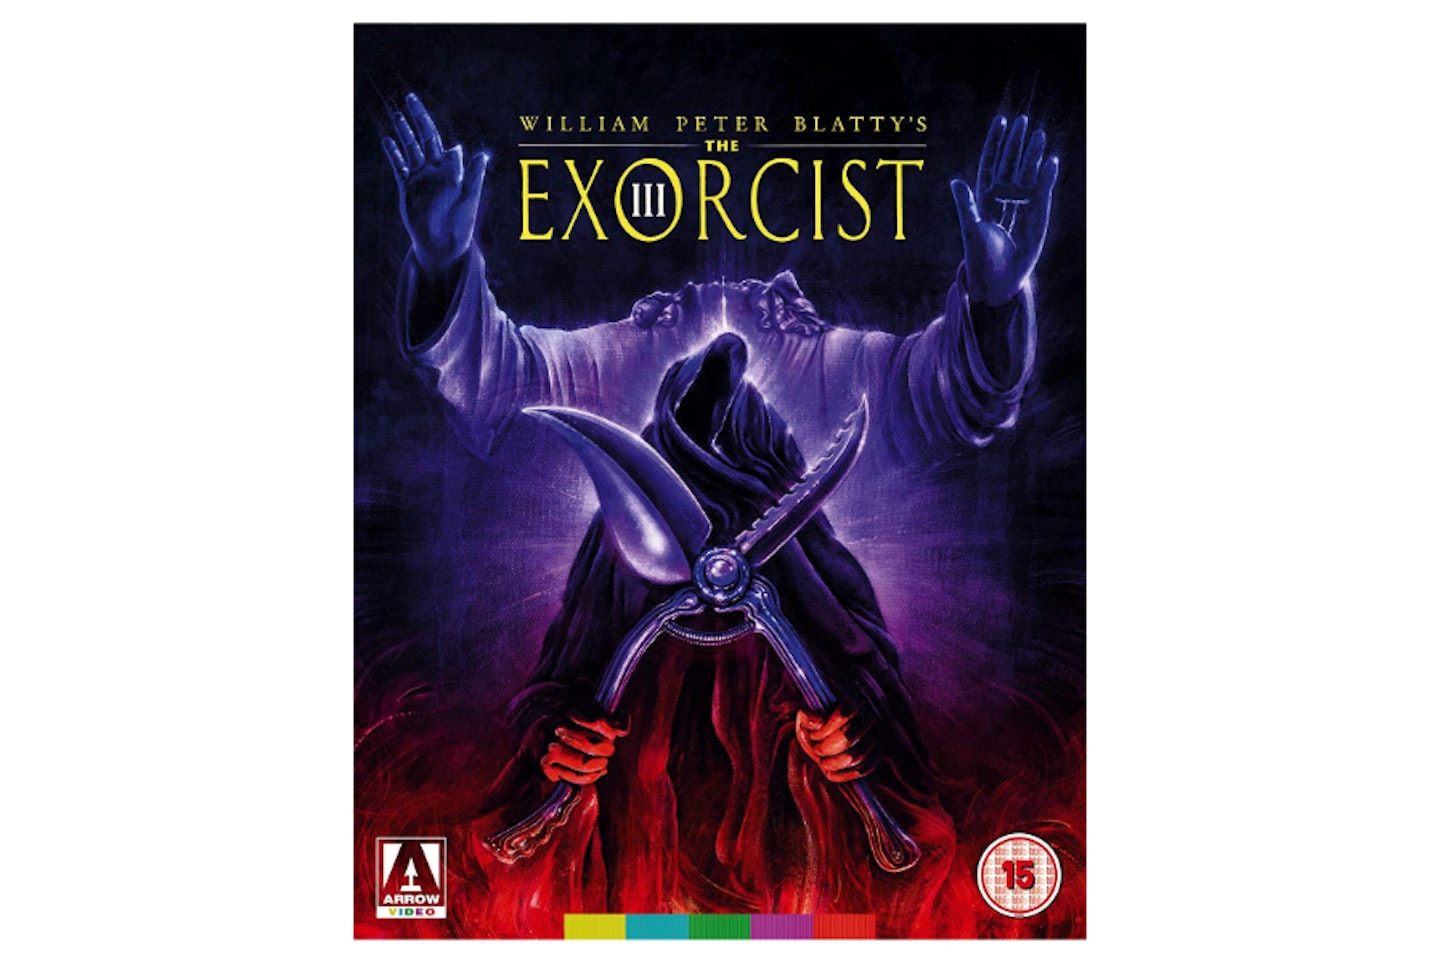 The Exorcist III – Arrow Video, £14.99